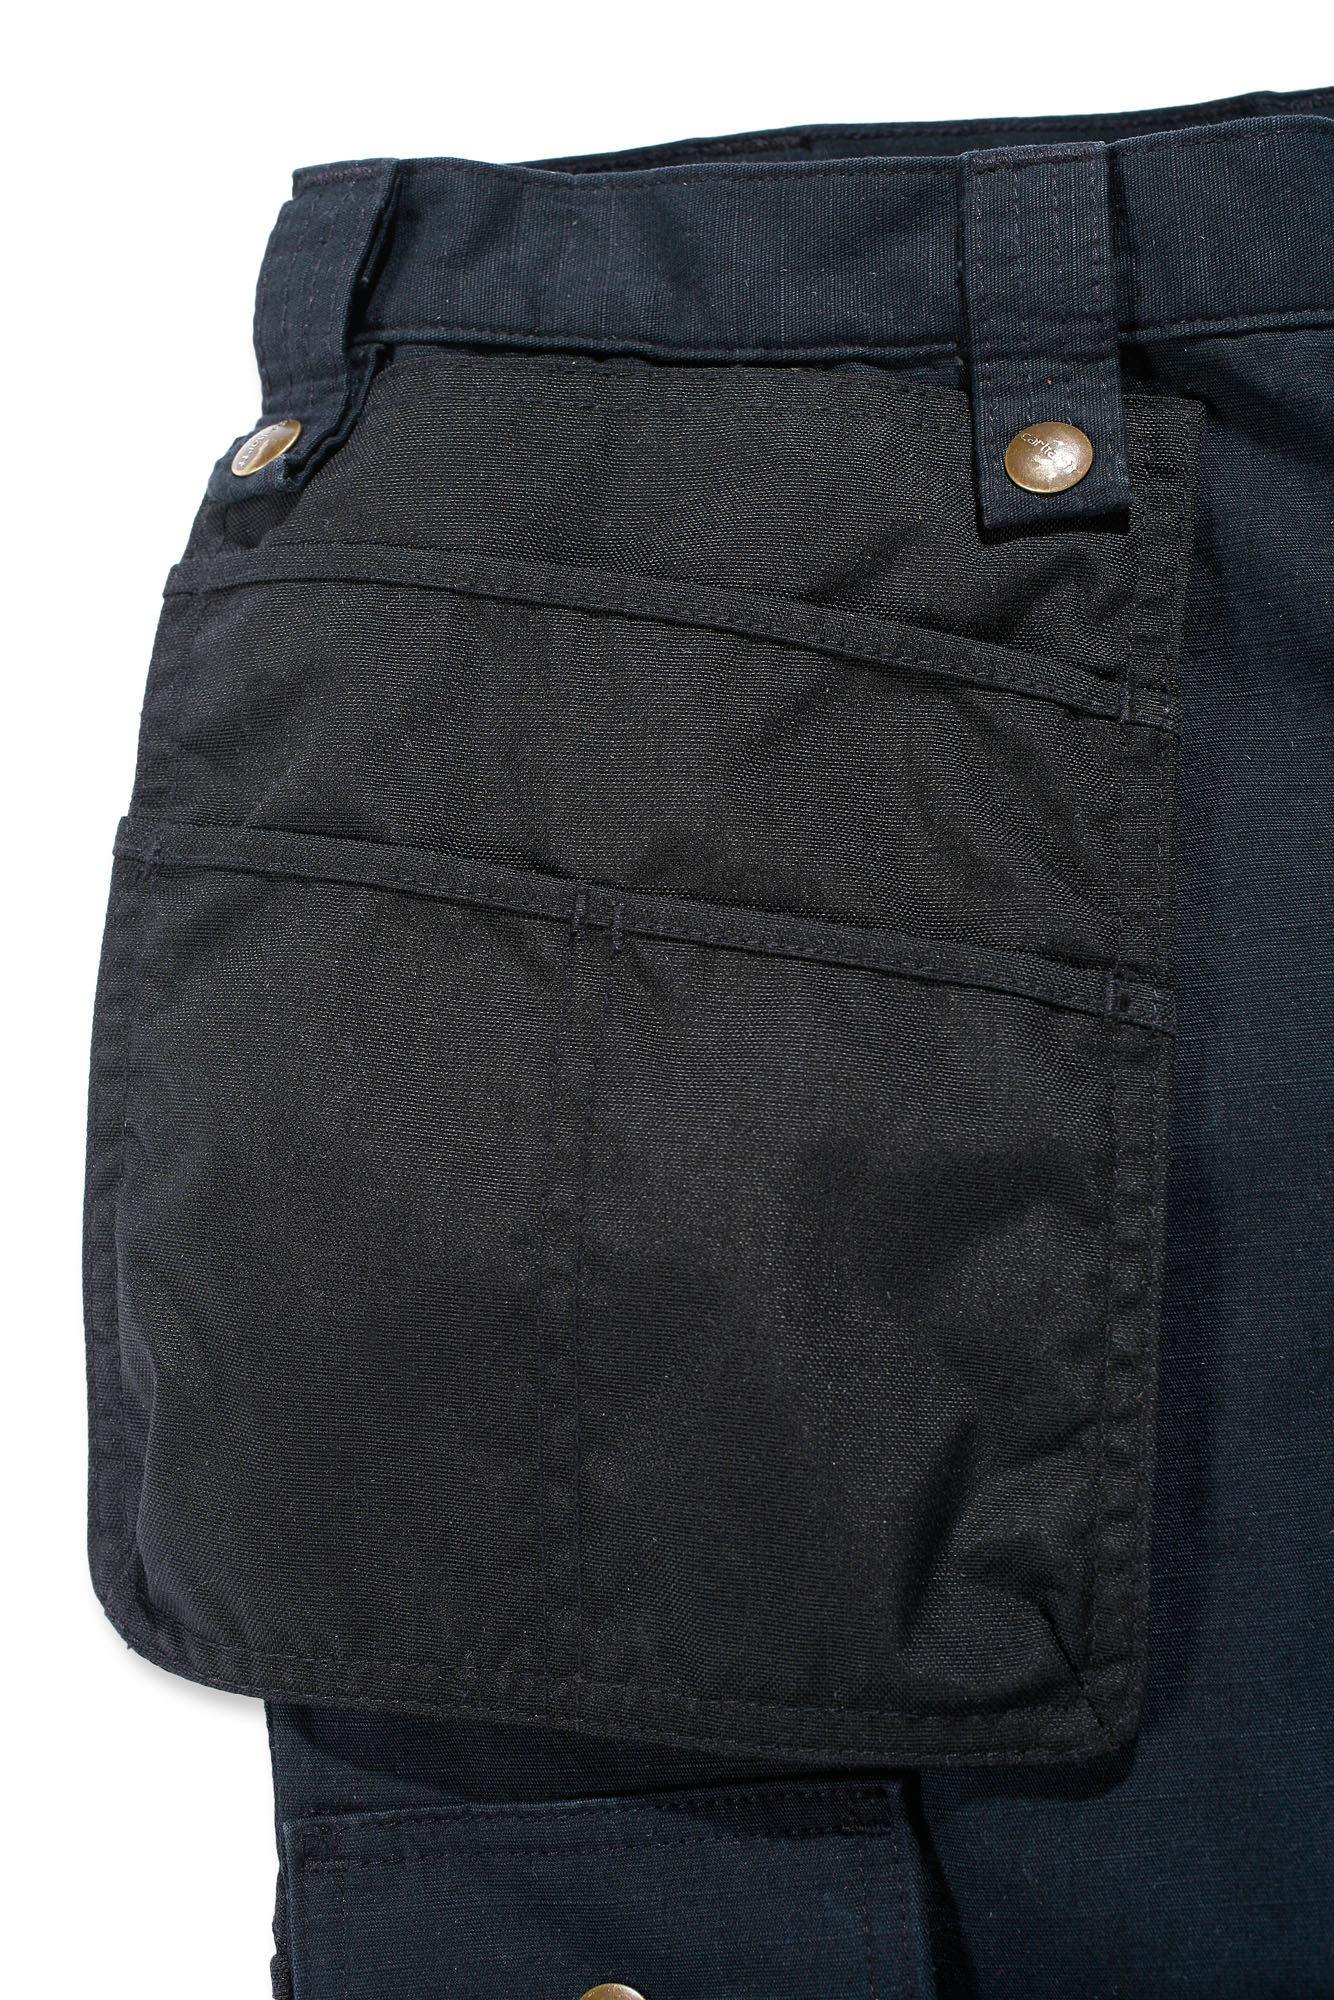 carhartt pants with knee pad pockets